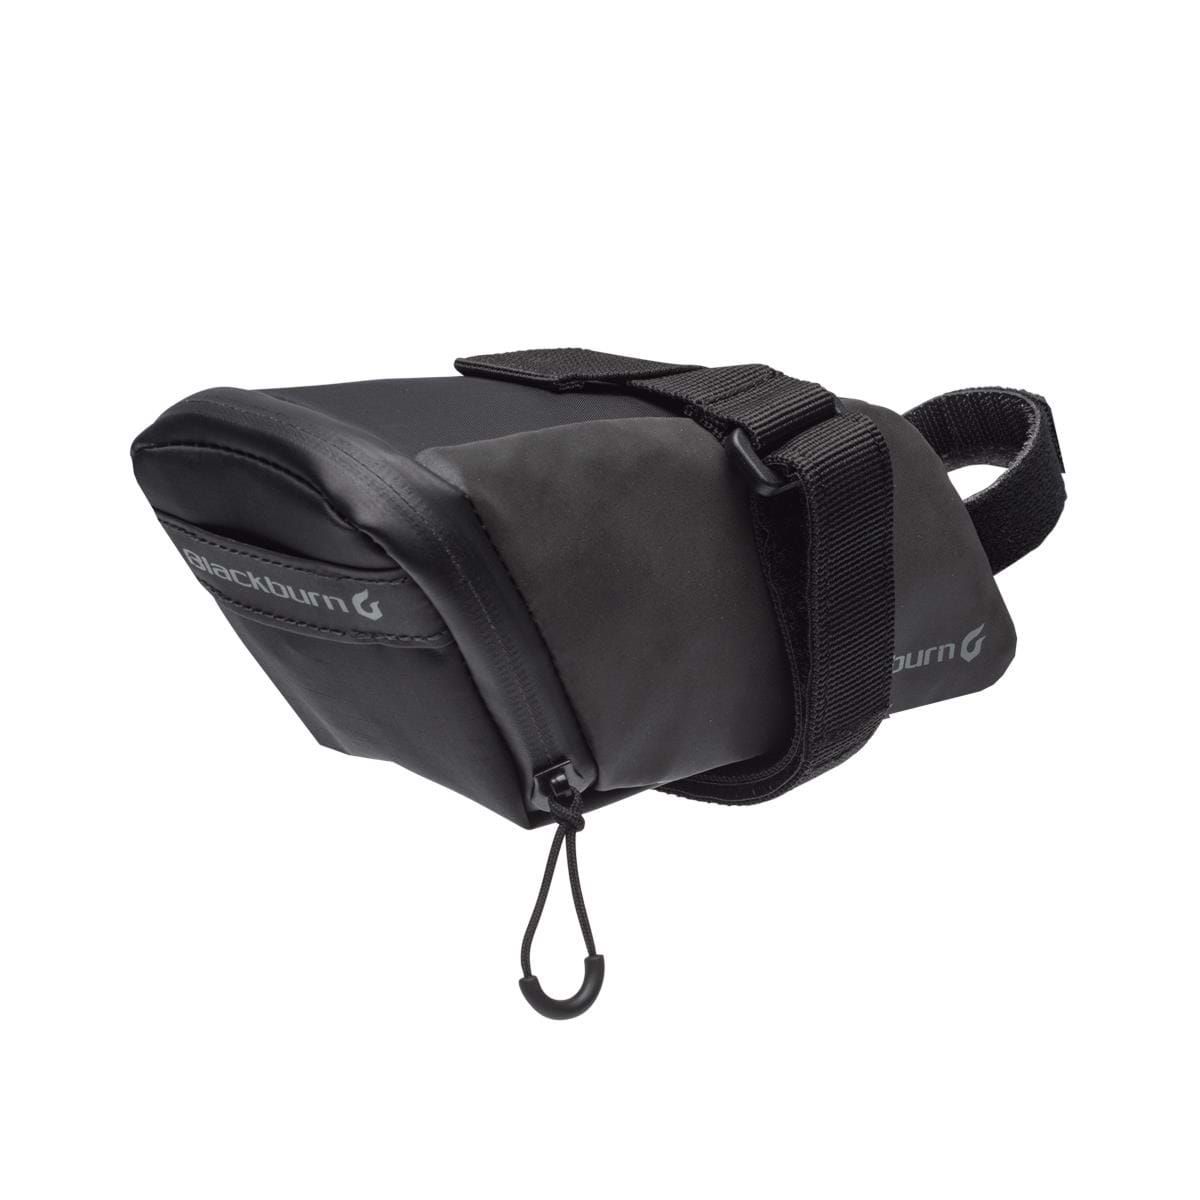 Blackburn Grid Medium Saddle Bag - £22.49 | Bags - Seat/Post and Frame ...